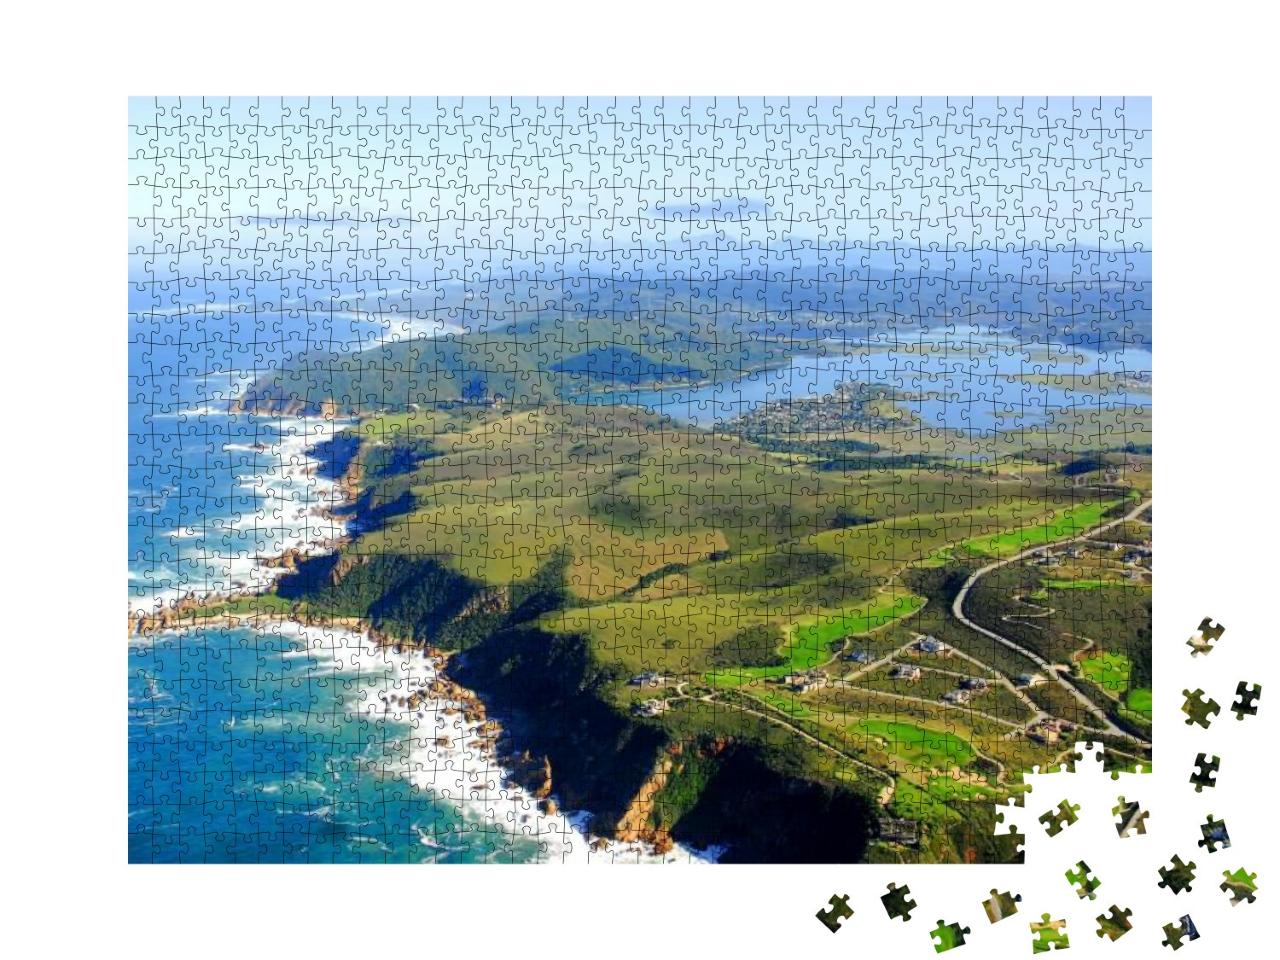 Puzzle 1000 Teile „Luftaufnahme von The Knysna Heads, Südafrika“